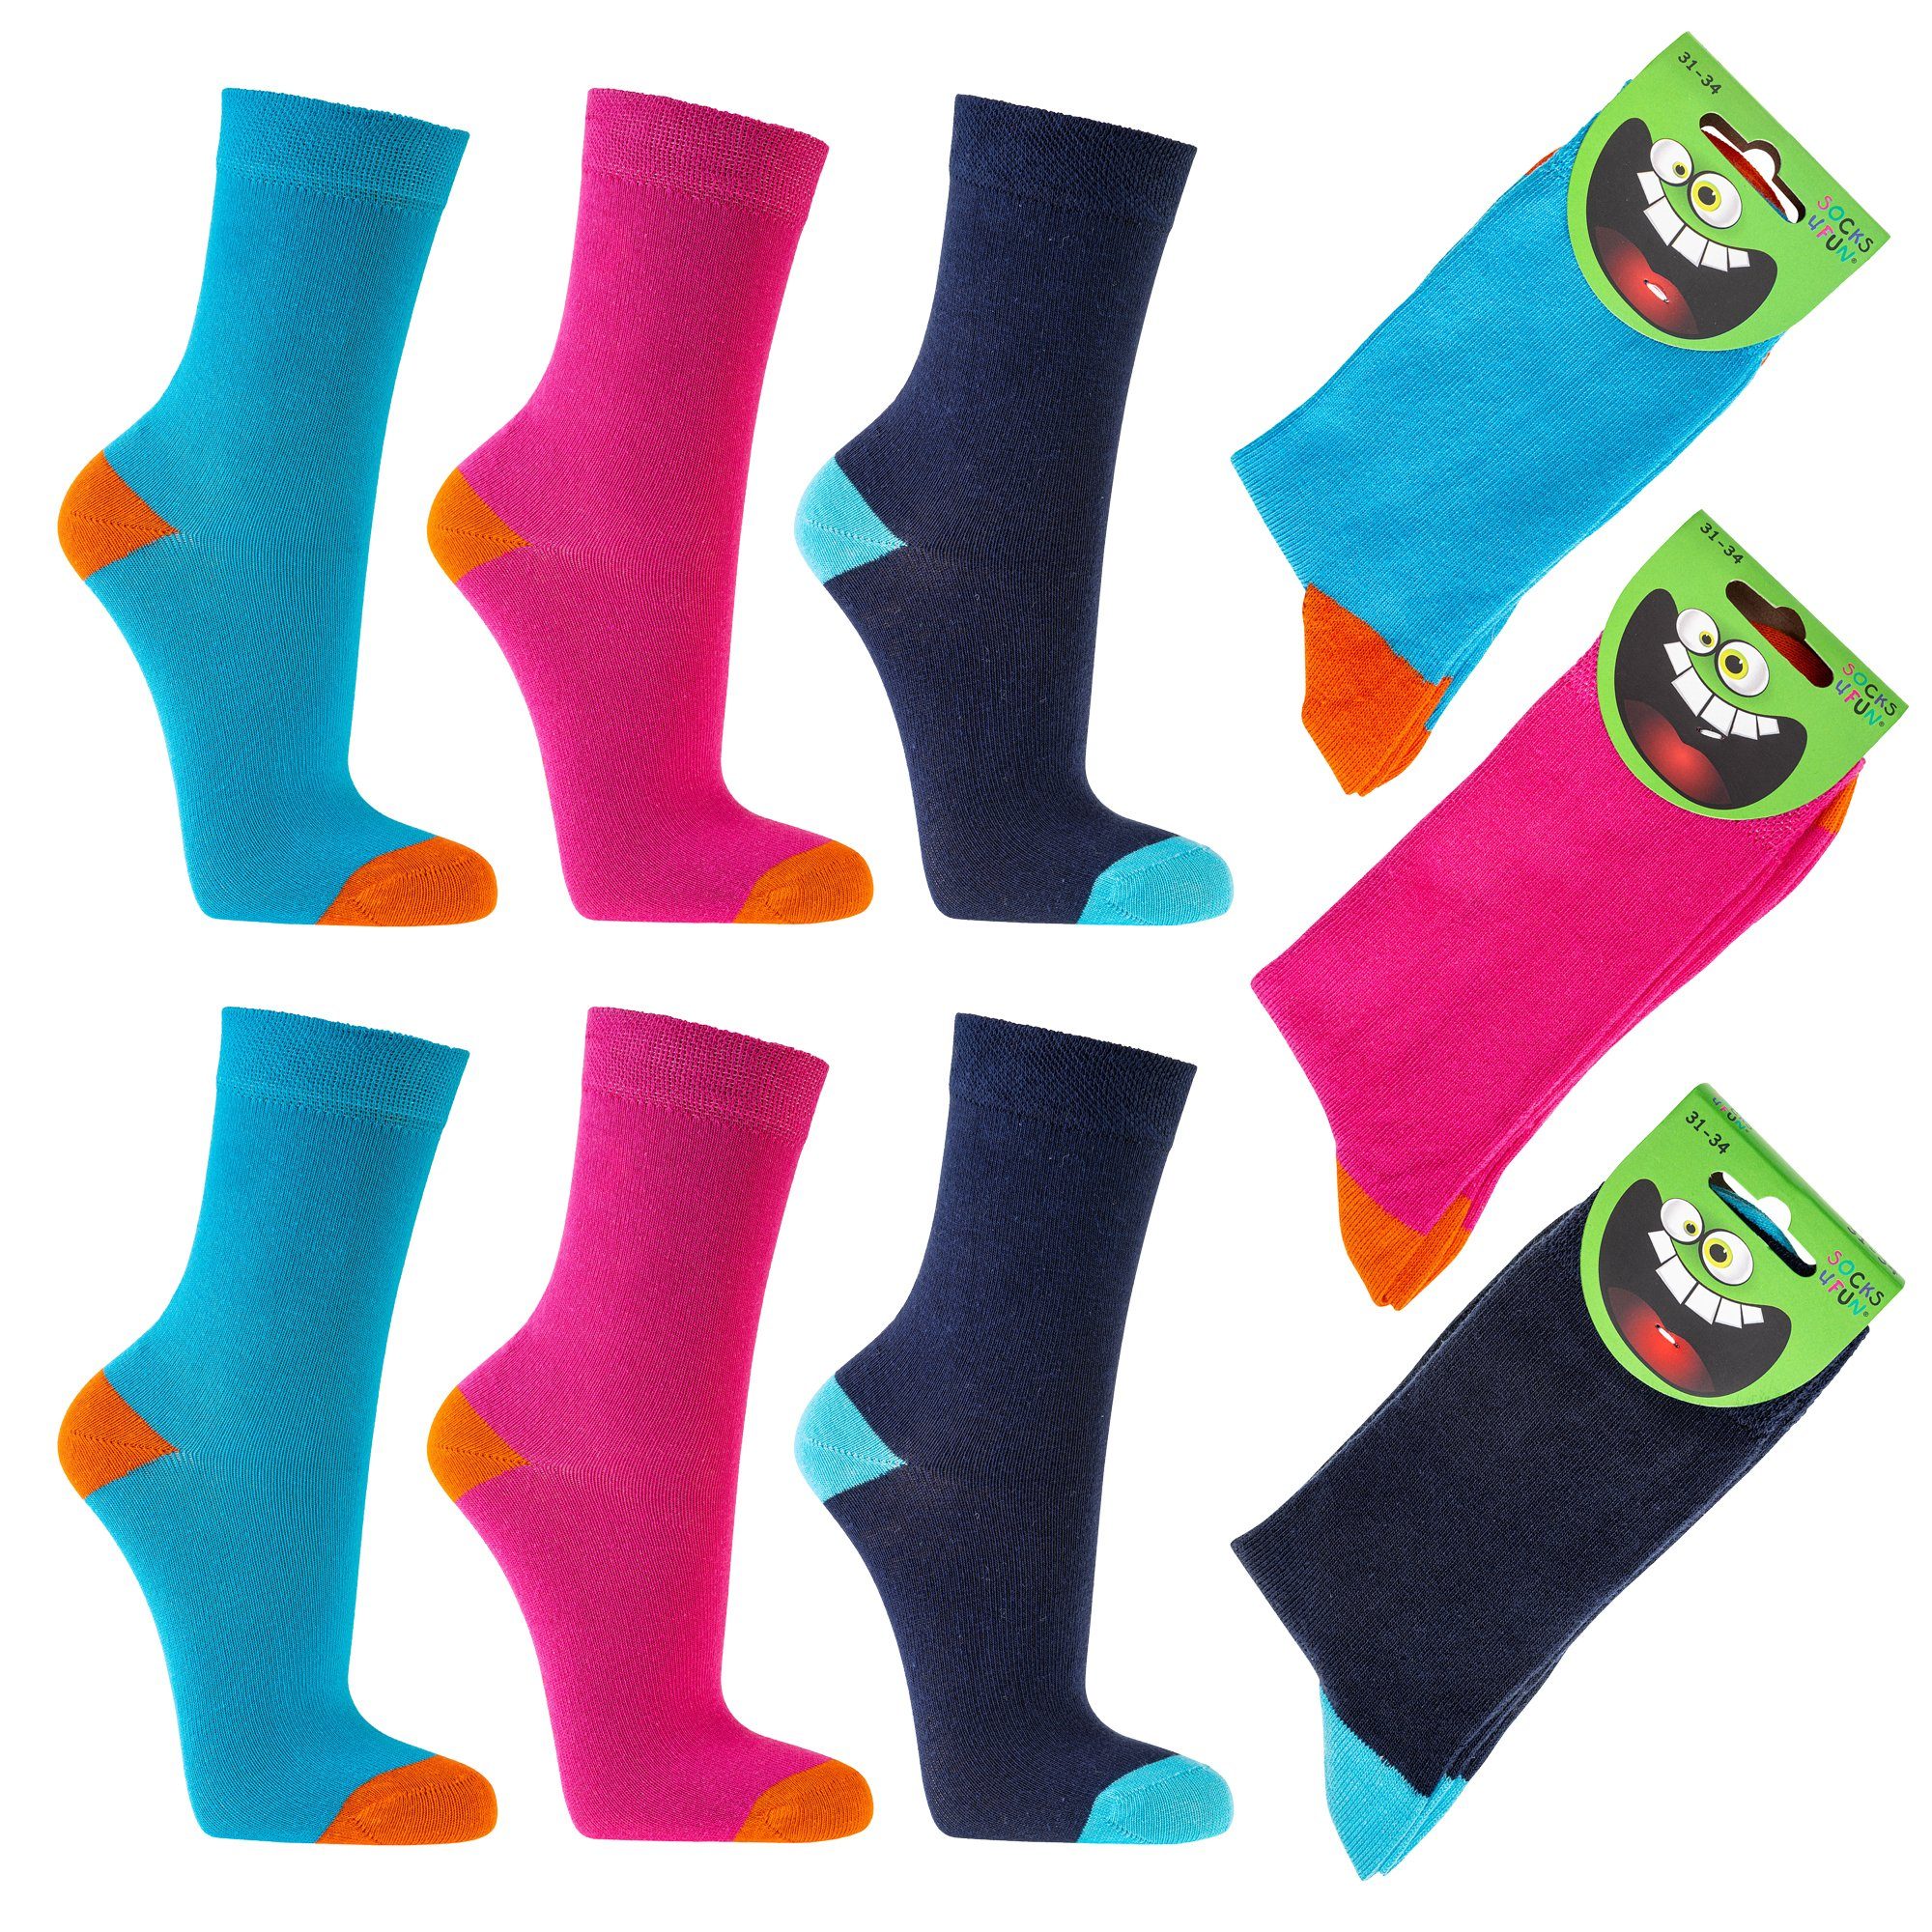 Socks 4 Fun Langsocken 3192 (Packung, 9-Paar, 9 Paar) unifarbene Kinder Socken, Jungen & Mädchen, Kindersocken türkis+marine+pink